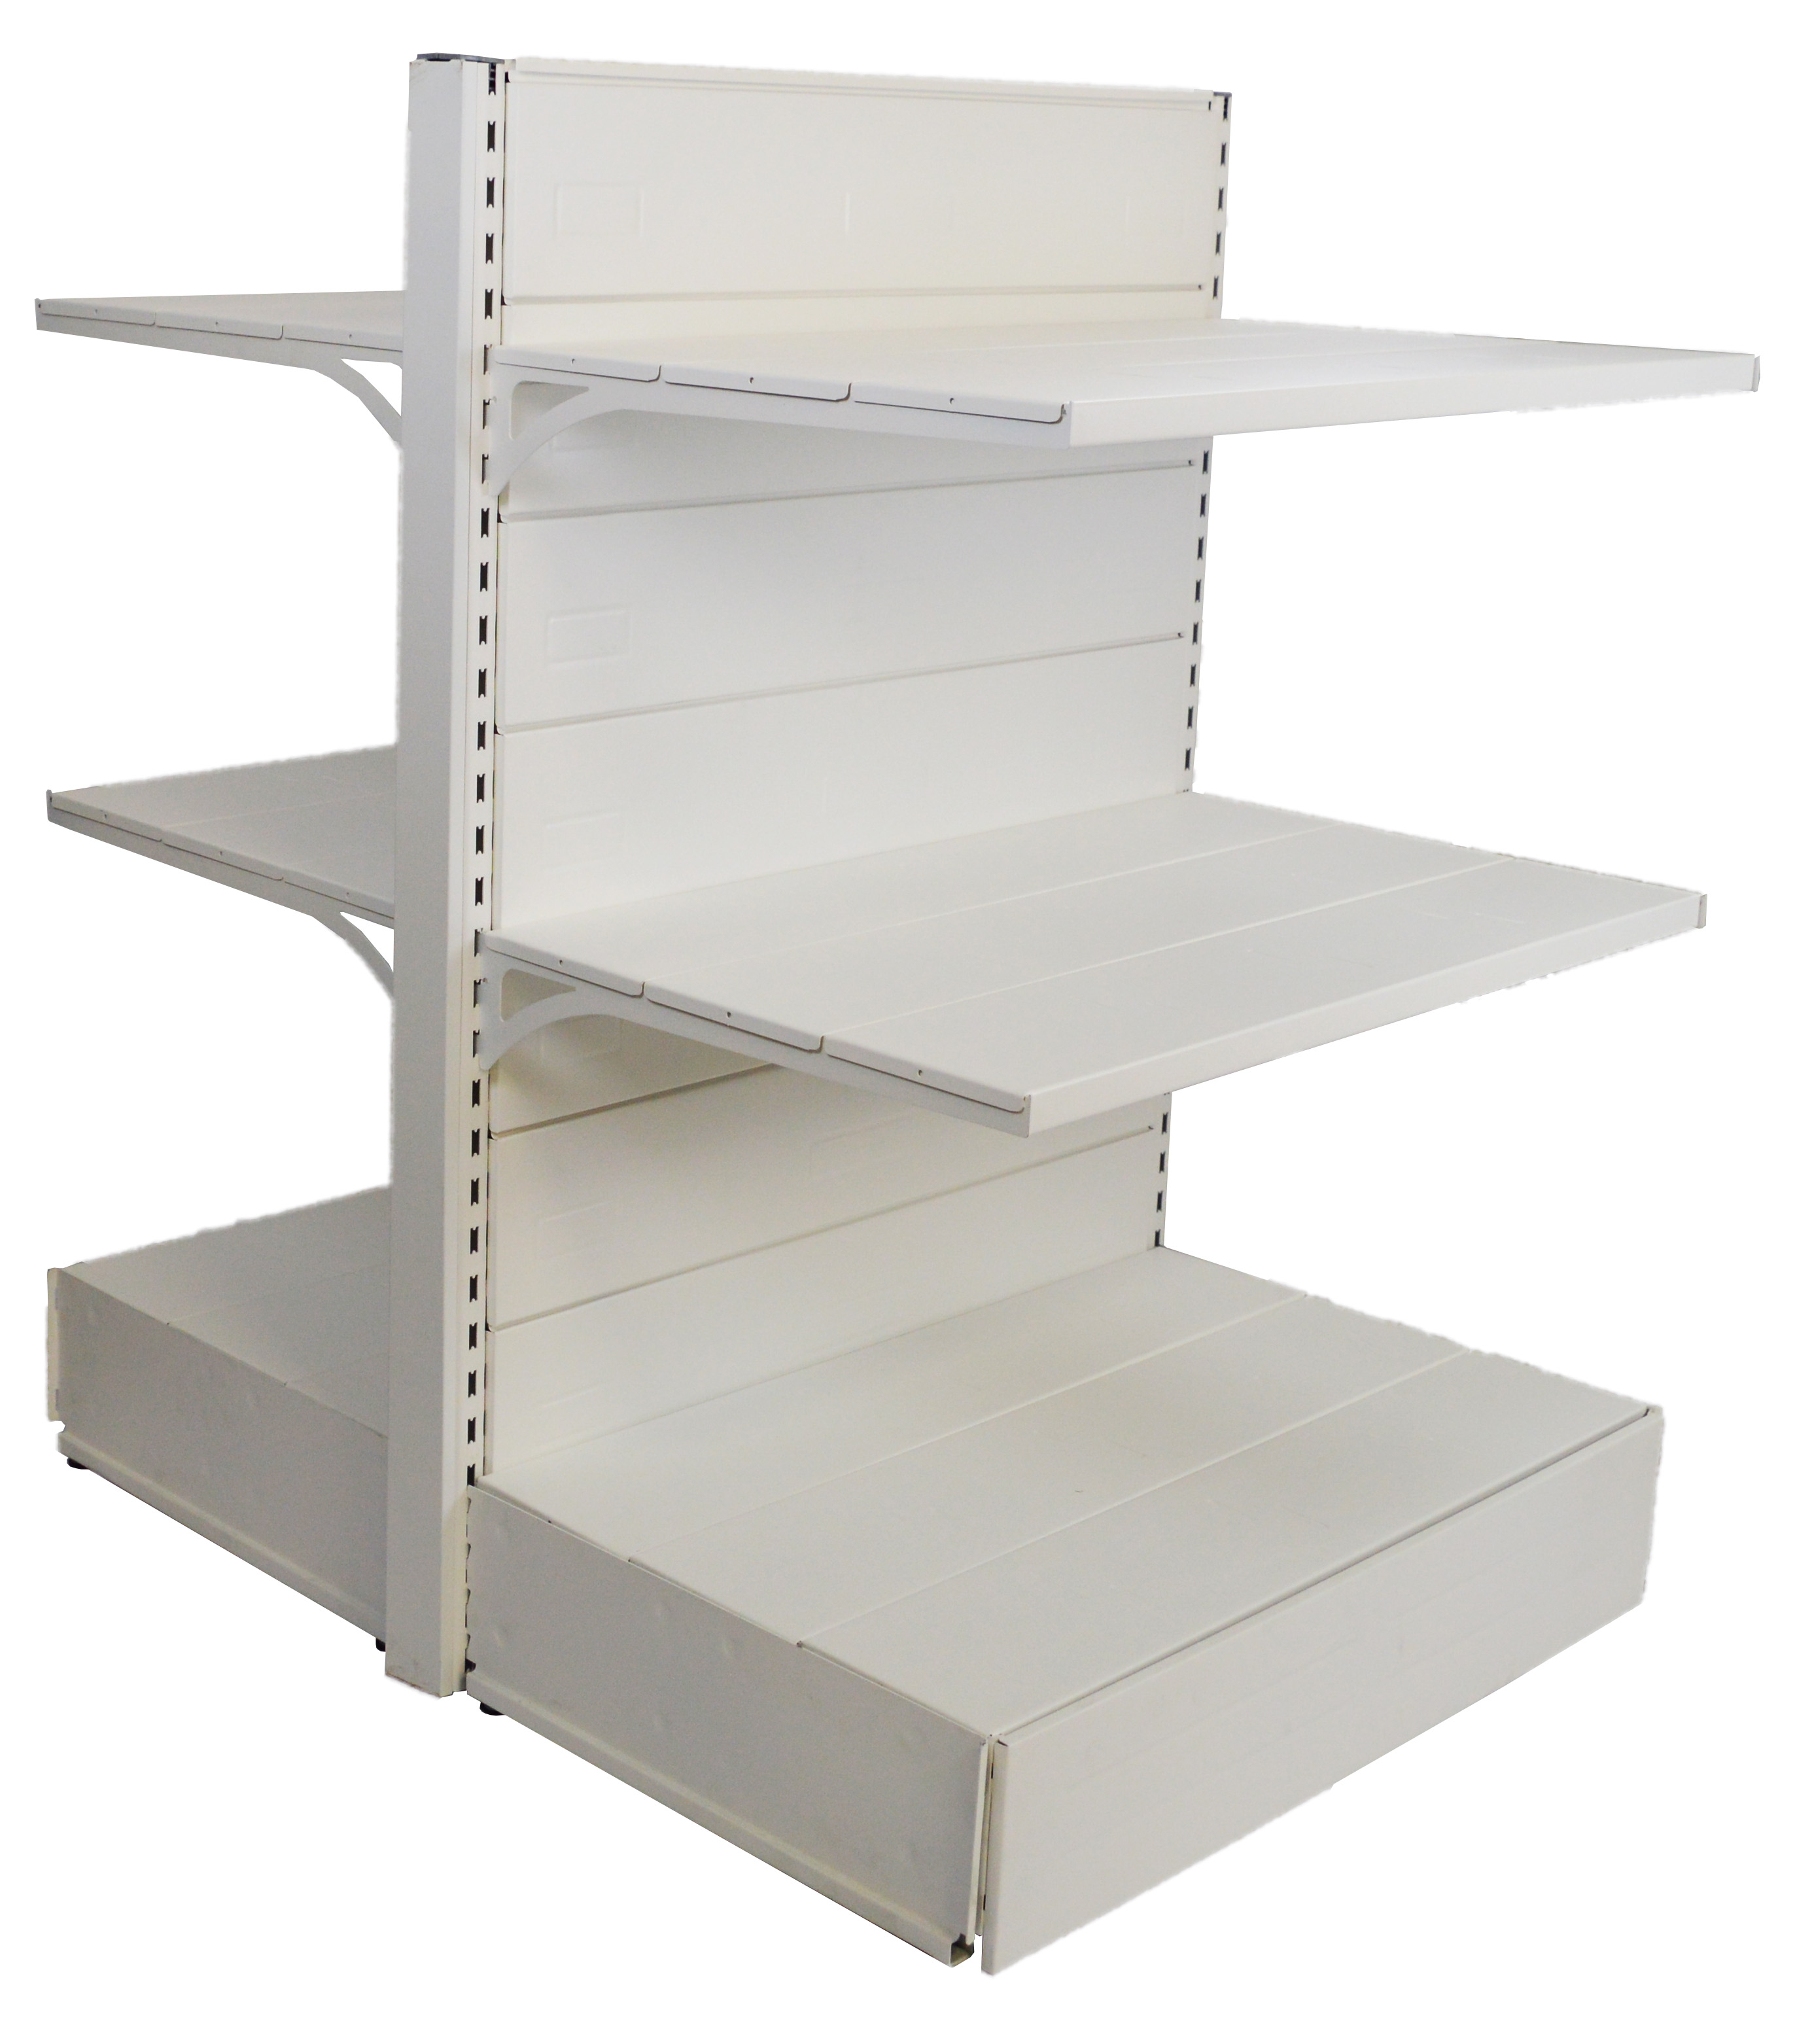 castellani scaffalatura metallica per arredamento negozi colore bianco cm. 97x60x140h, bianco